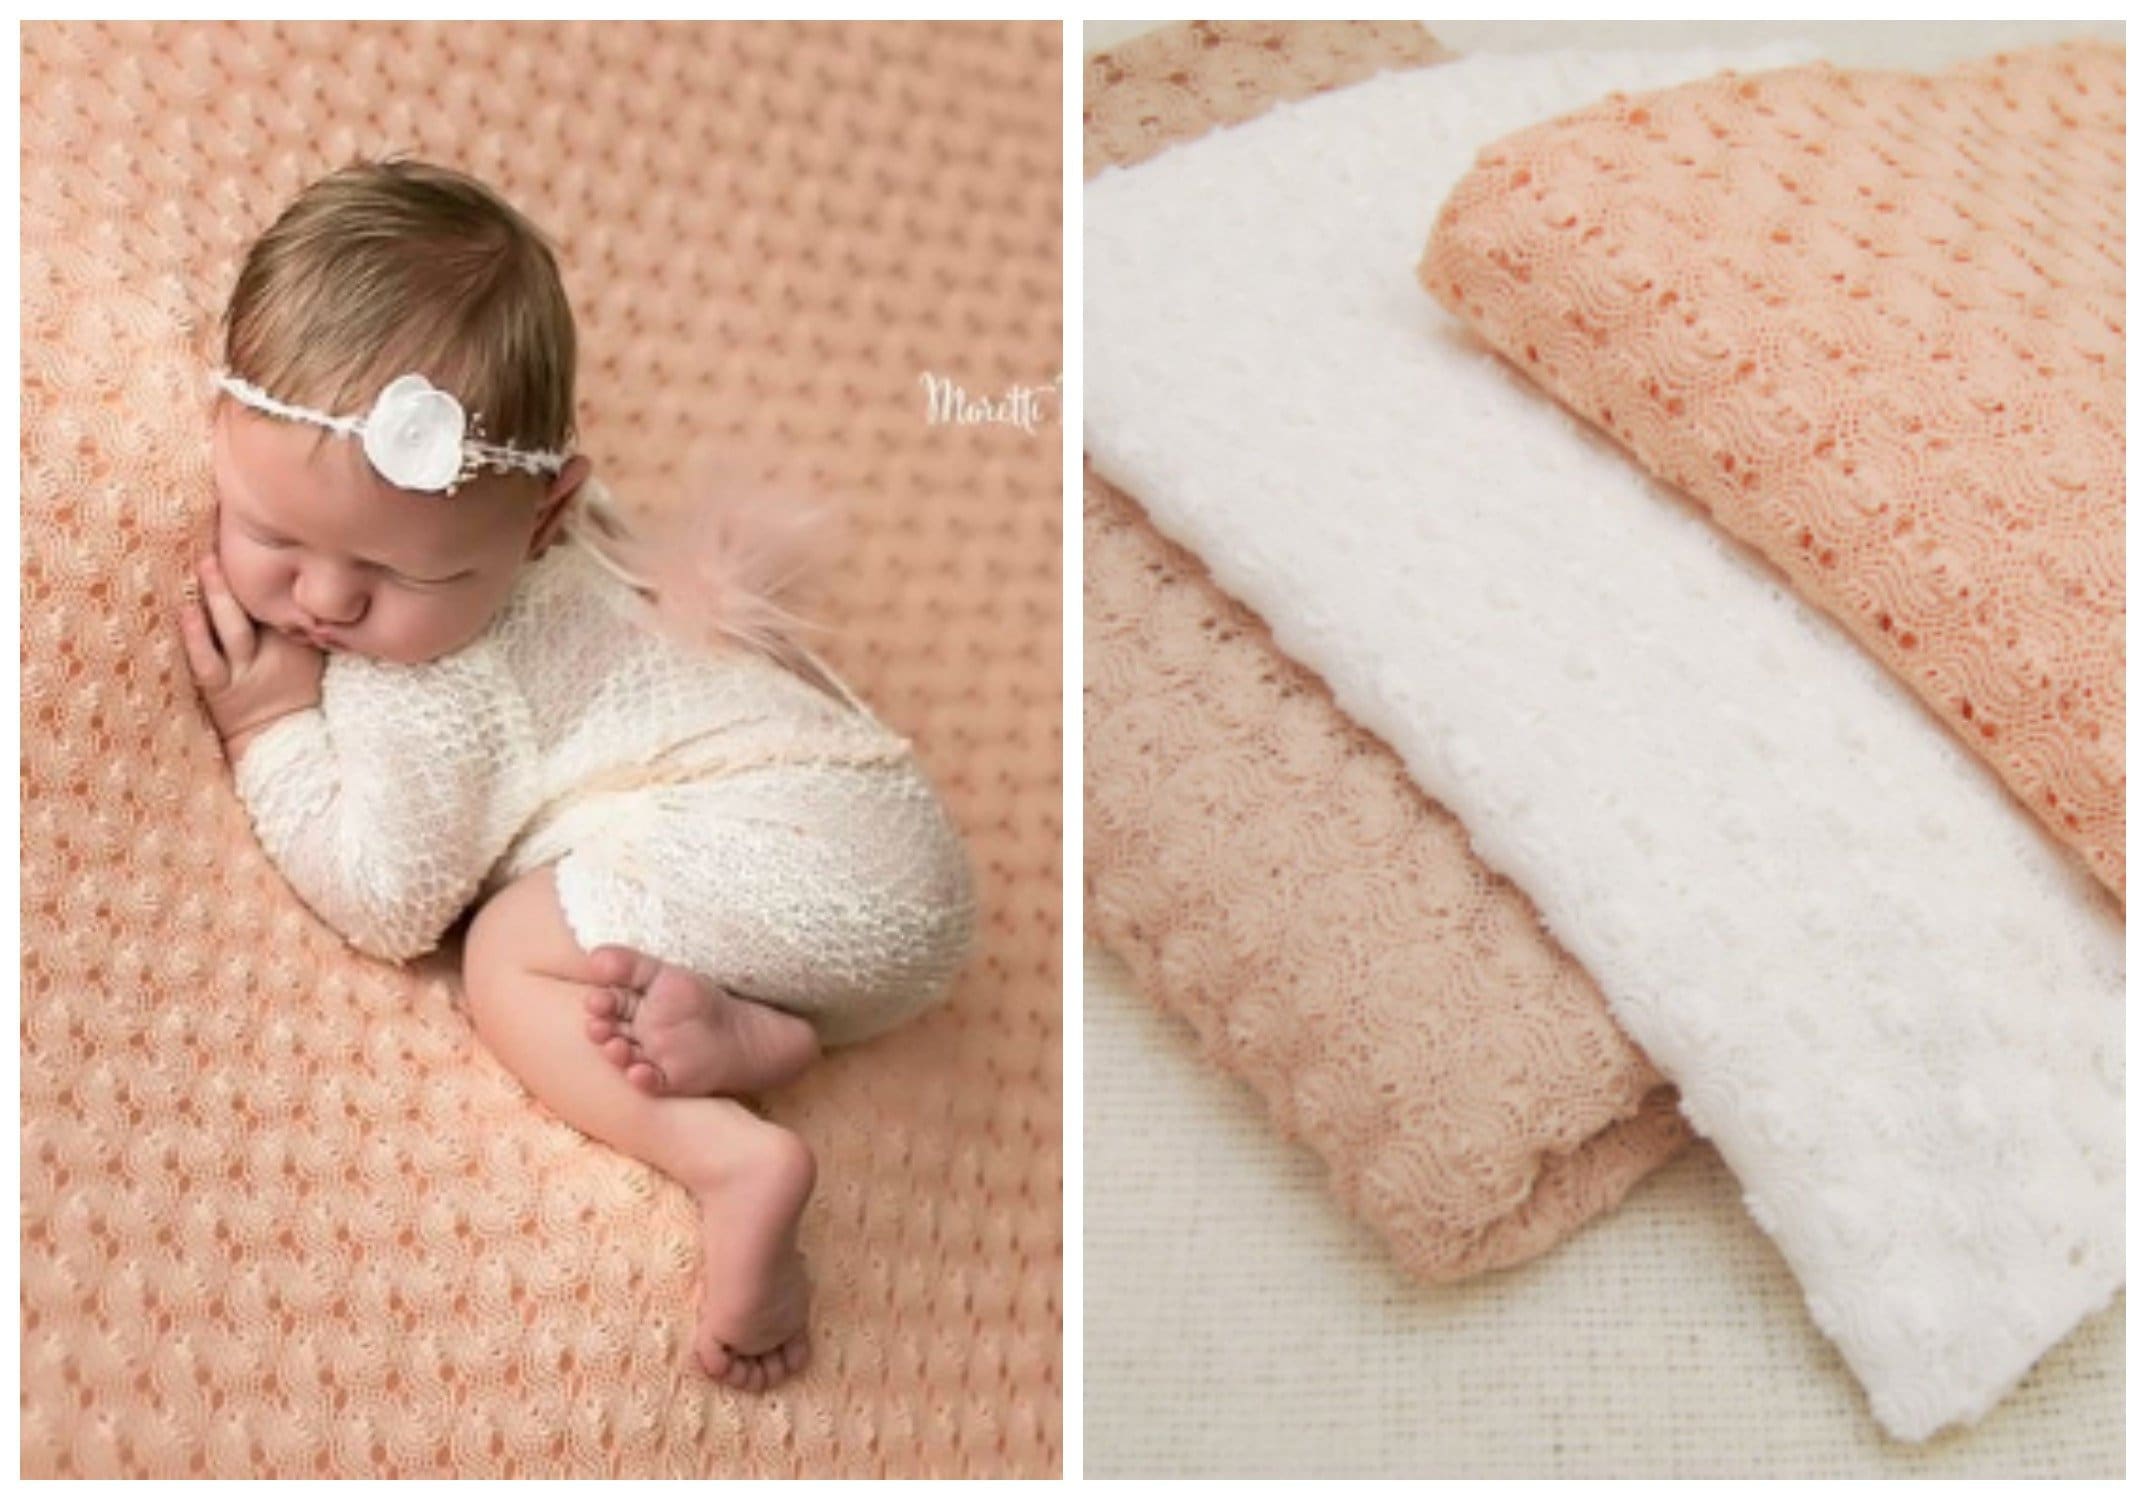 SALE Knit Texture Baby Posing Fabric Blanket Rug Newborn Backdrop Photo Prop 